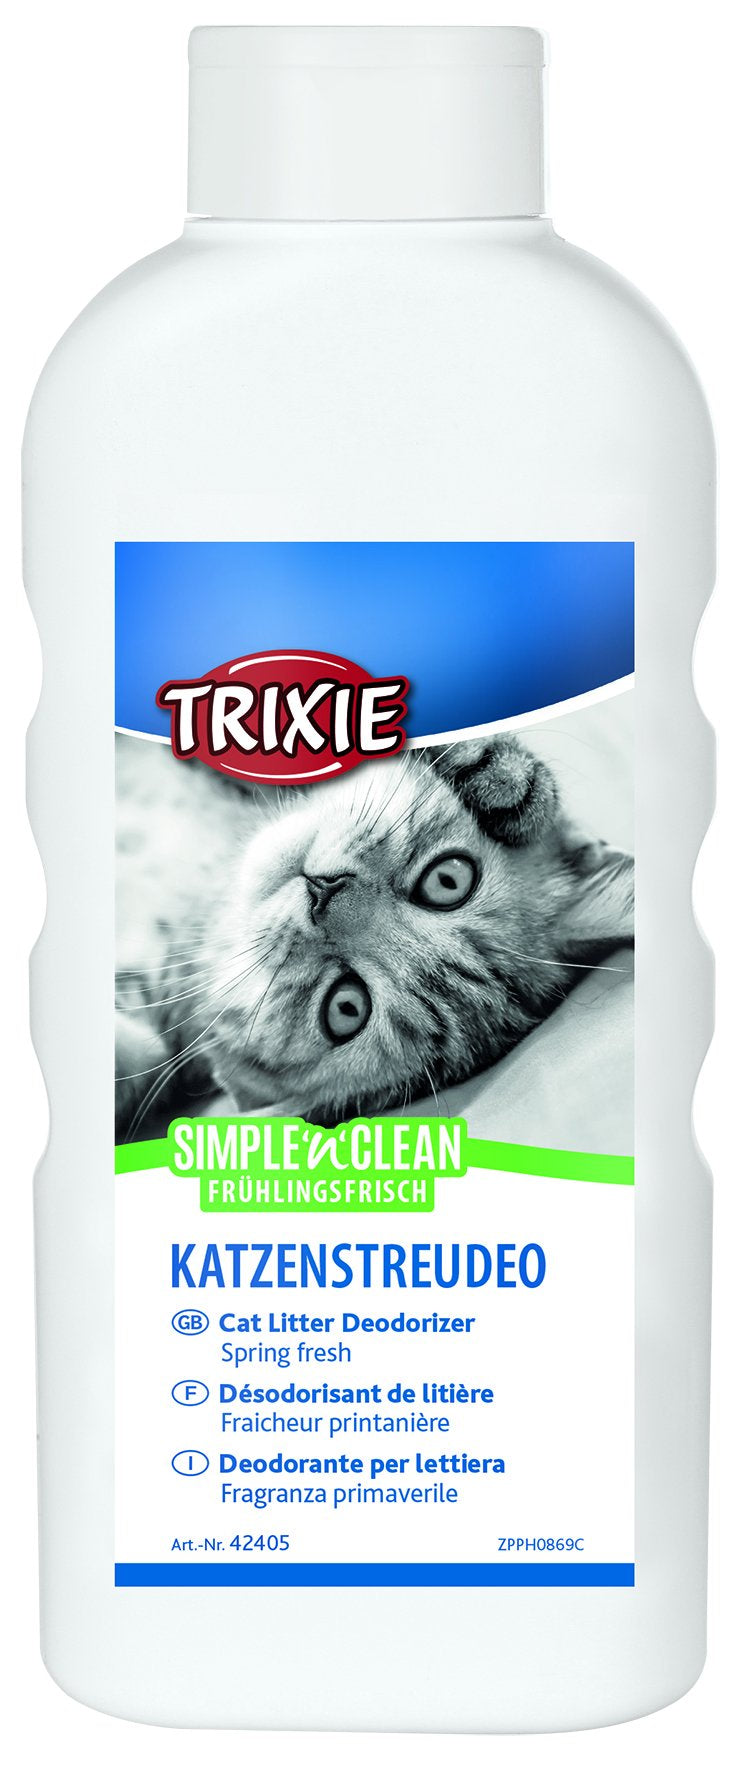 42405 Simple'n'Clean cat litter deodorizer, spring fresh, 750 g